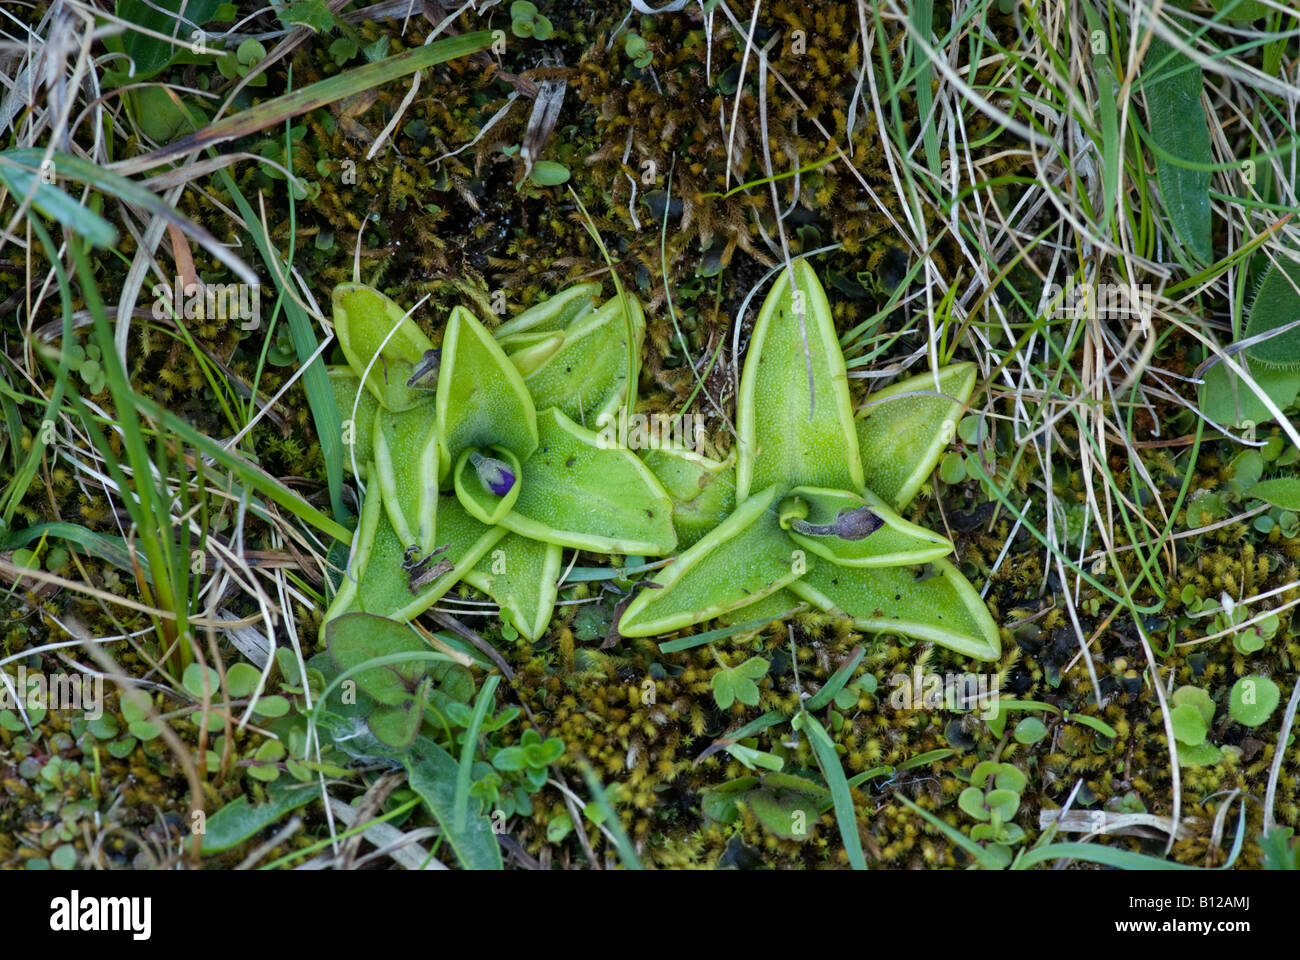 Grassette commune : Pinguicula vulgaris. Achill Island County Mayo Irlande Note boutons de fleurs Banque D'Images